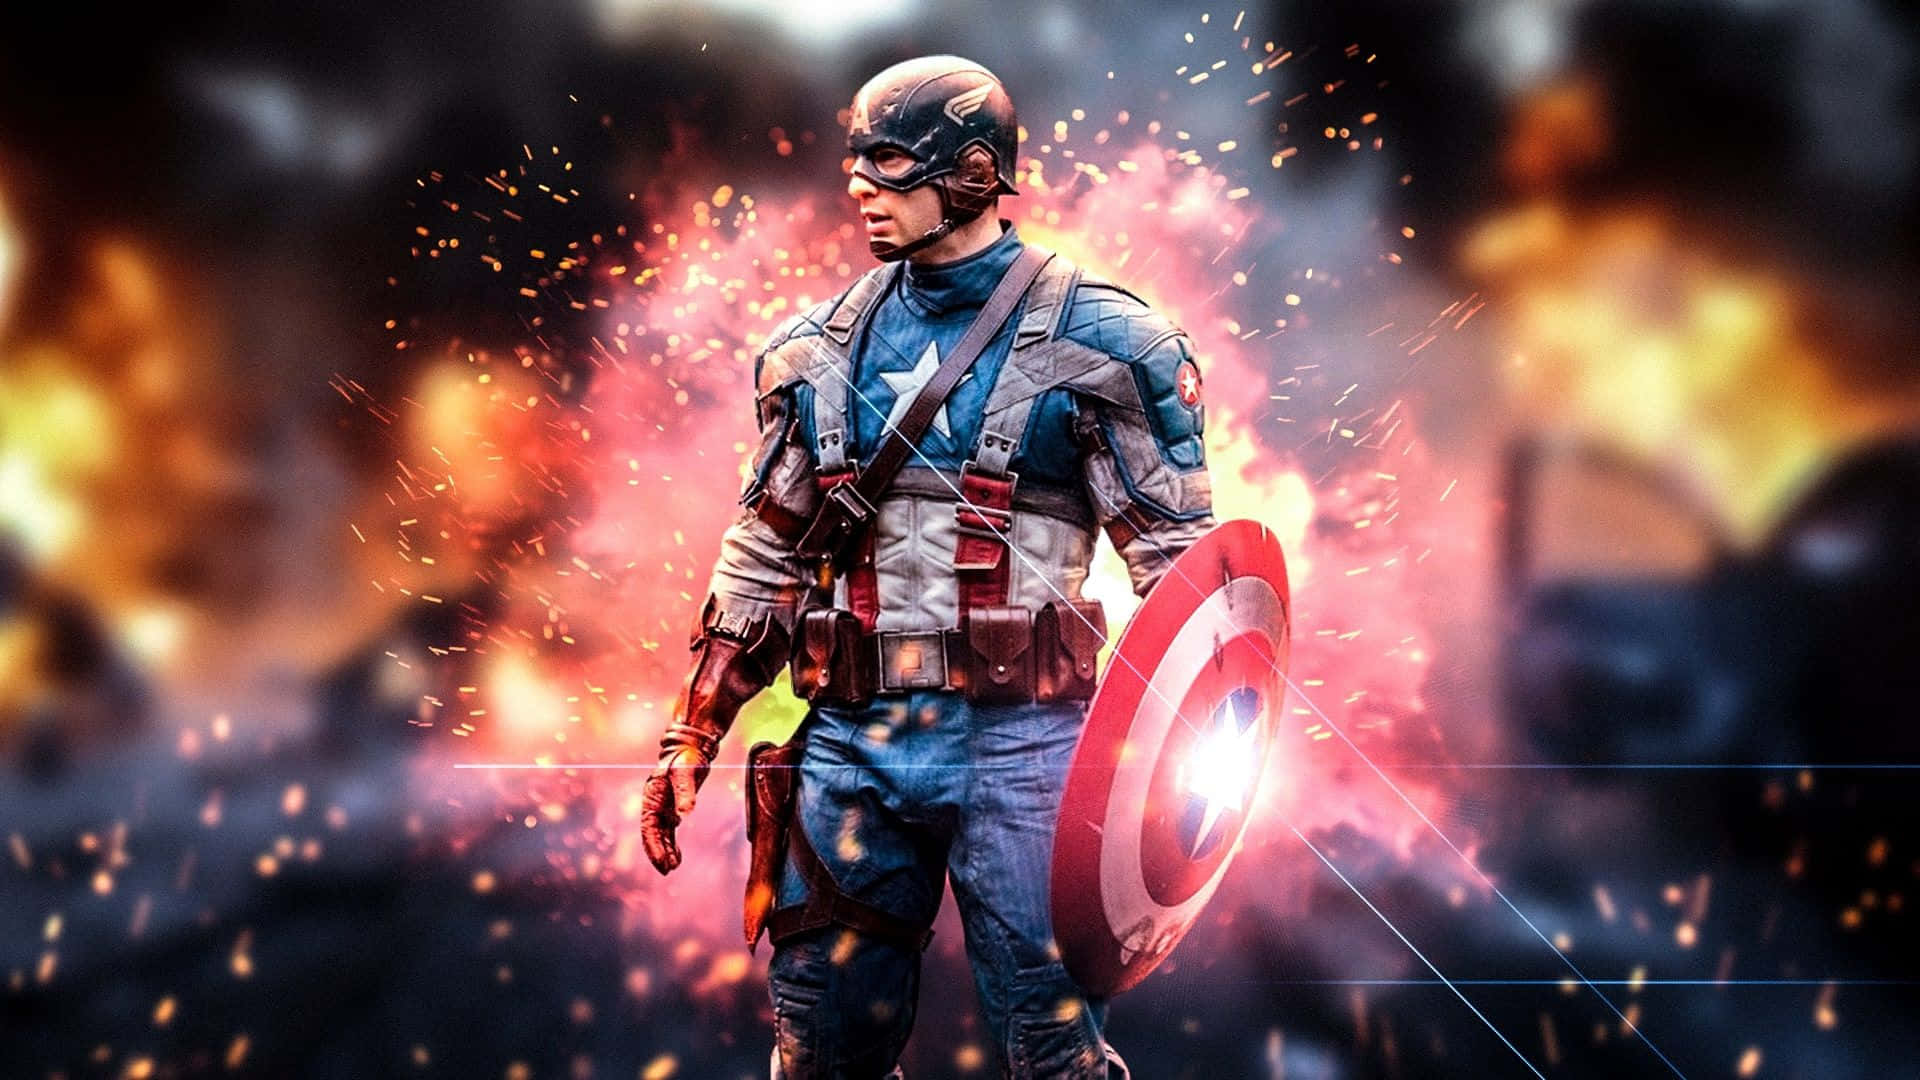 Captain America Action Backdrop Background